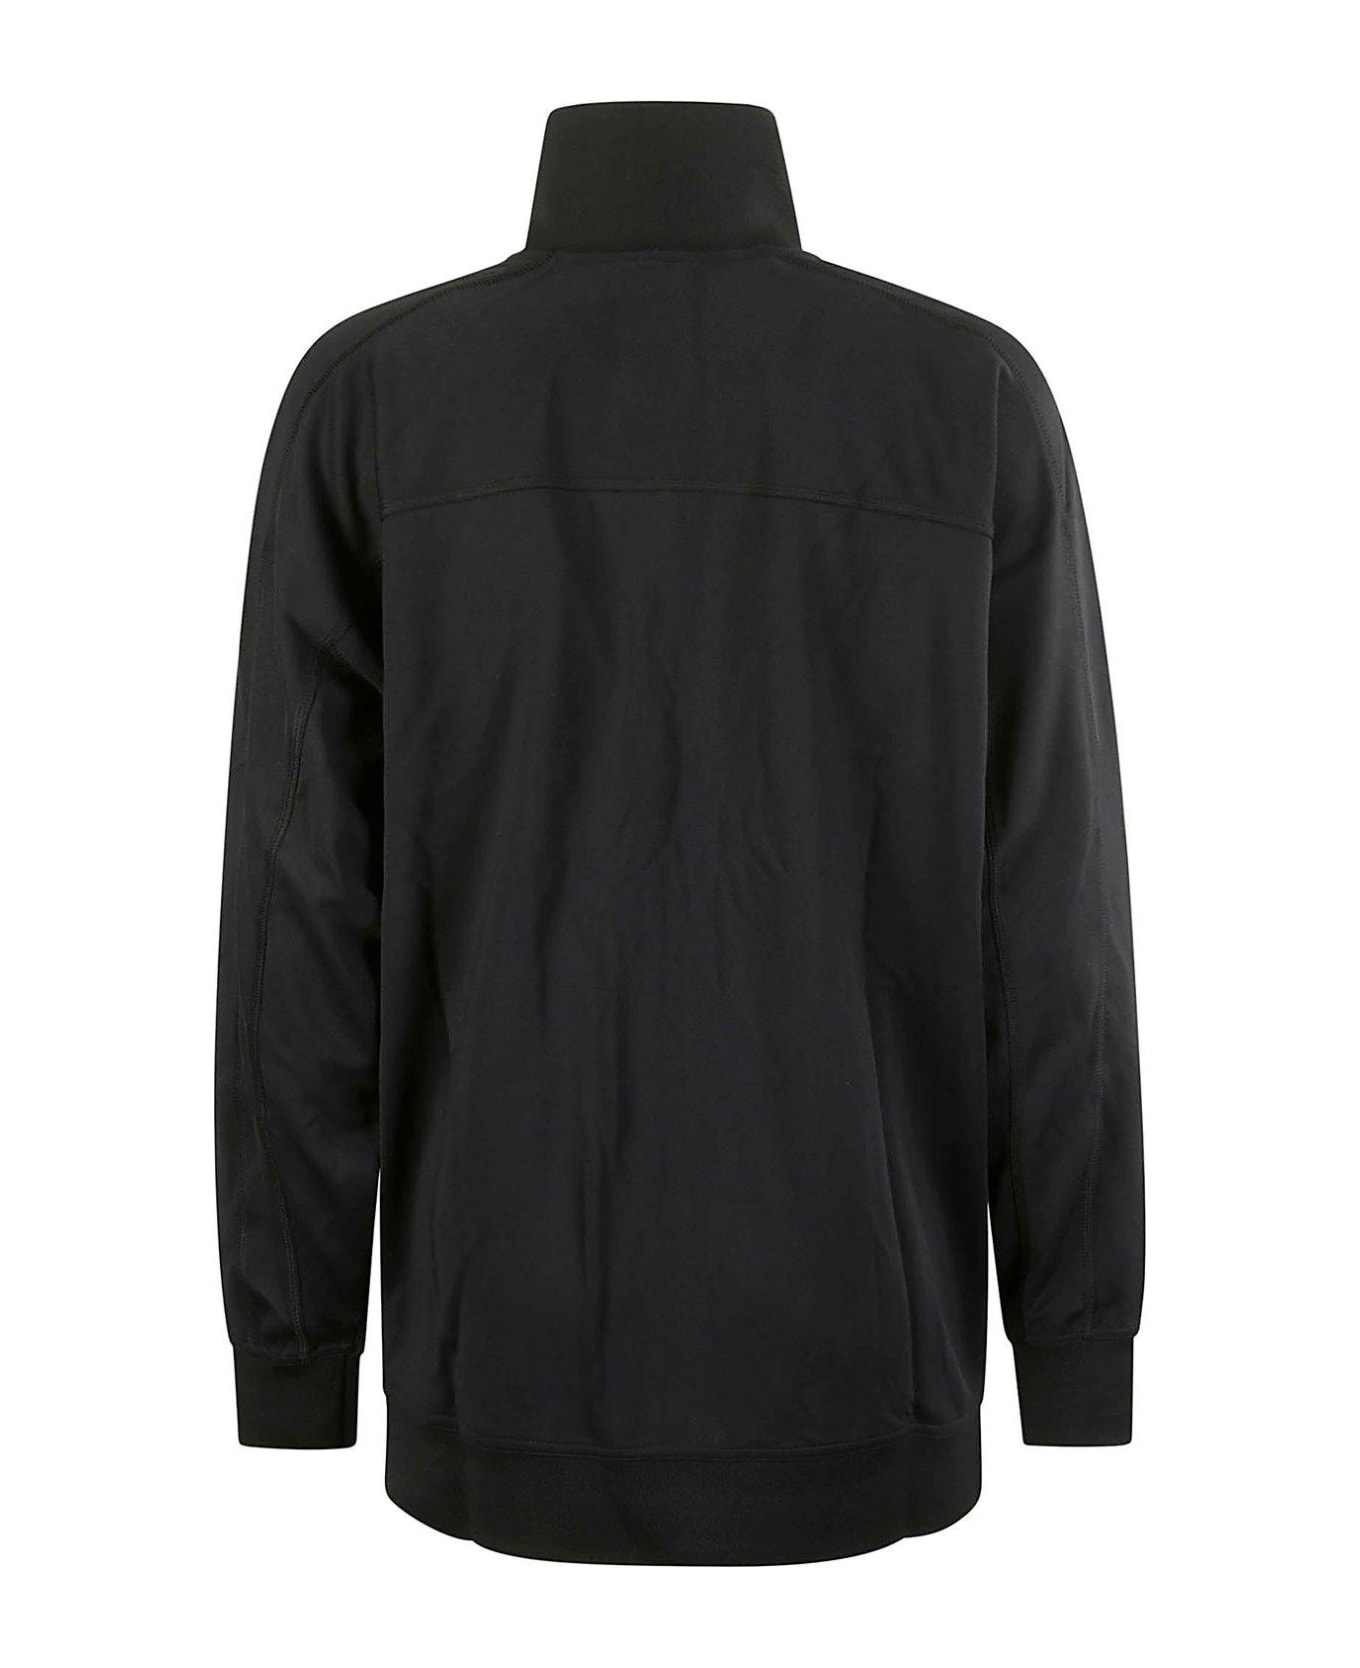 Adidas by Stella McCartney Truecasuals Zip-up Track Jacket - Black/white